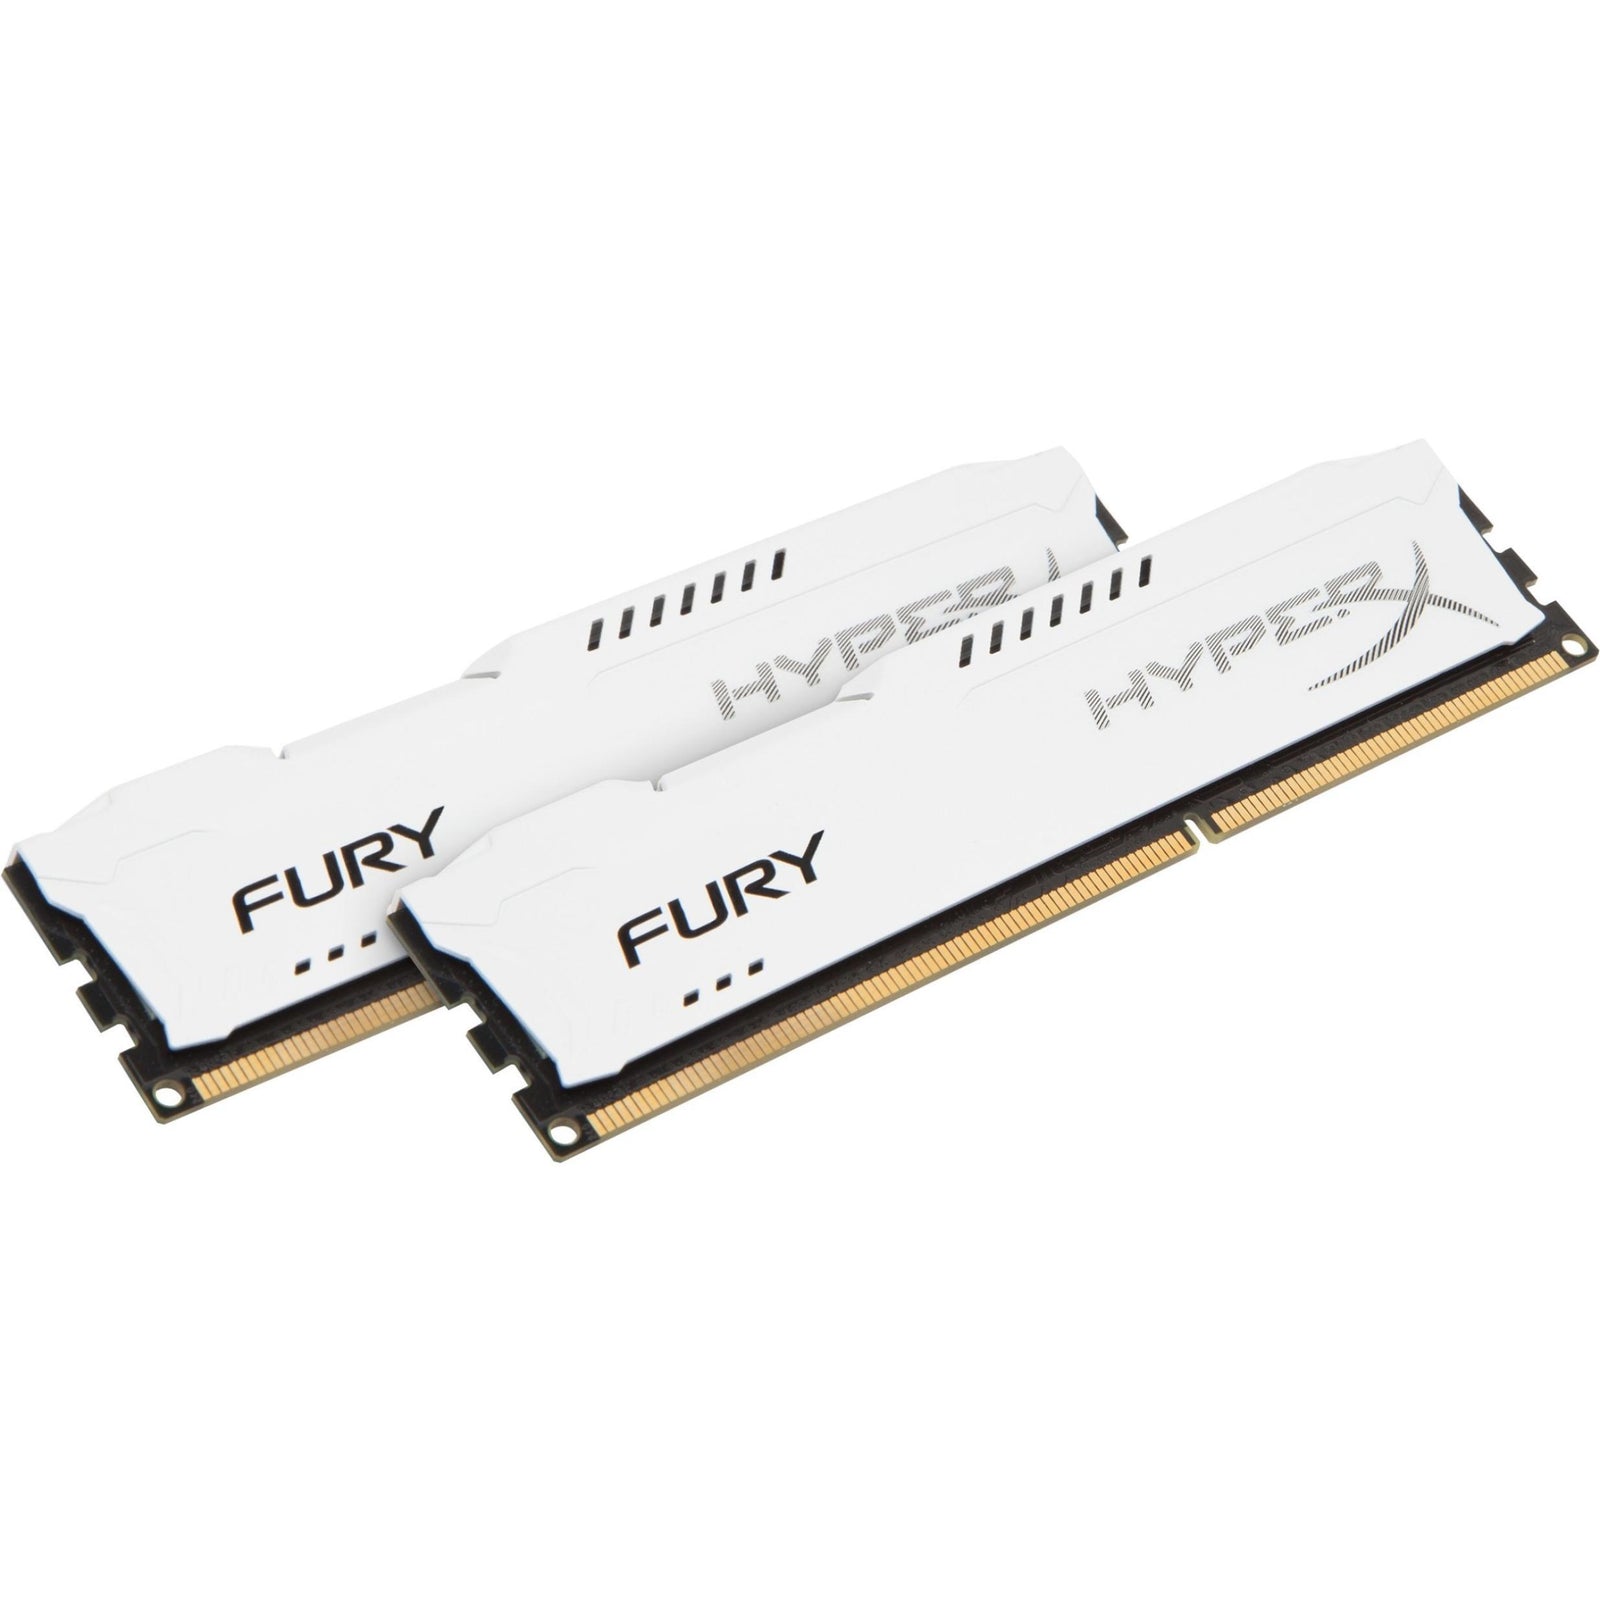 Kingston HyperX Fury 8GB DDR3 SDRAM Memory Module